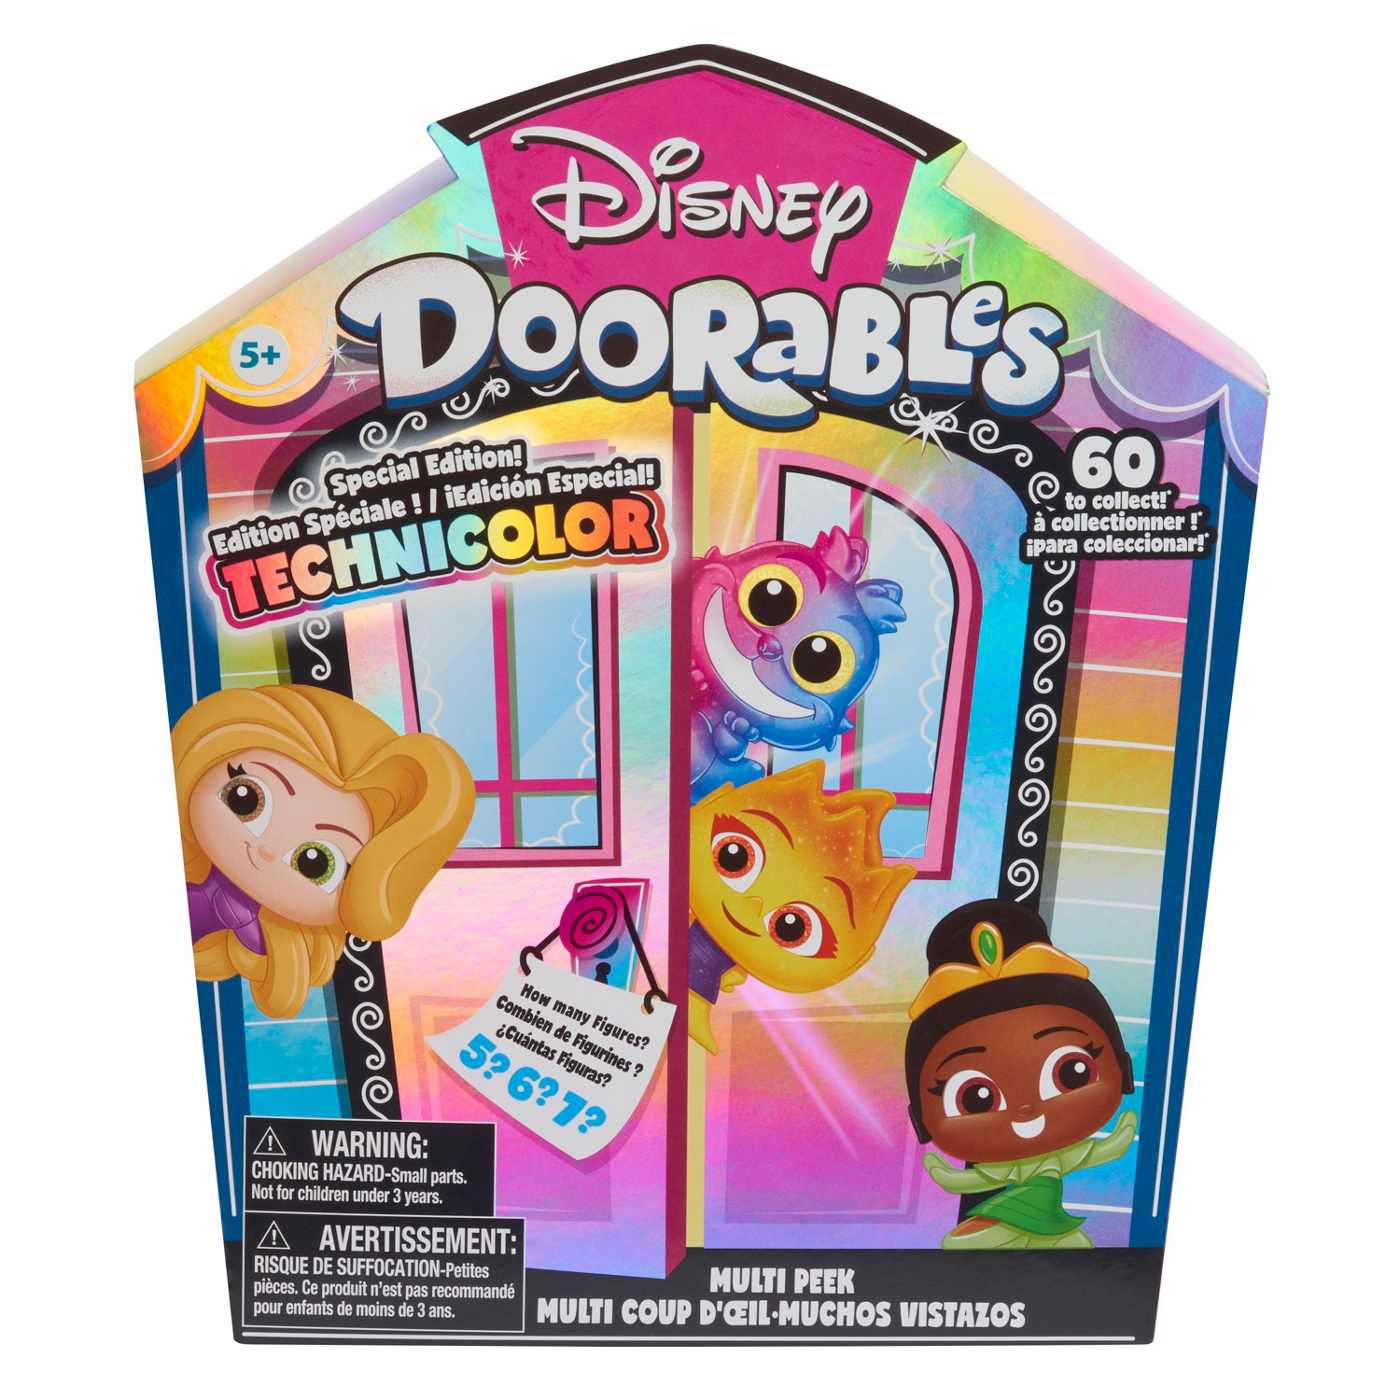 Disney Doorables Multi Peek Technicolor Takeover; image 1 of 2